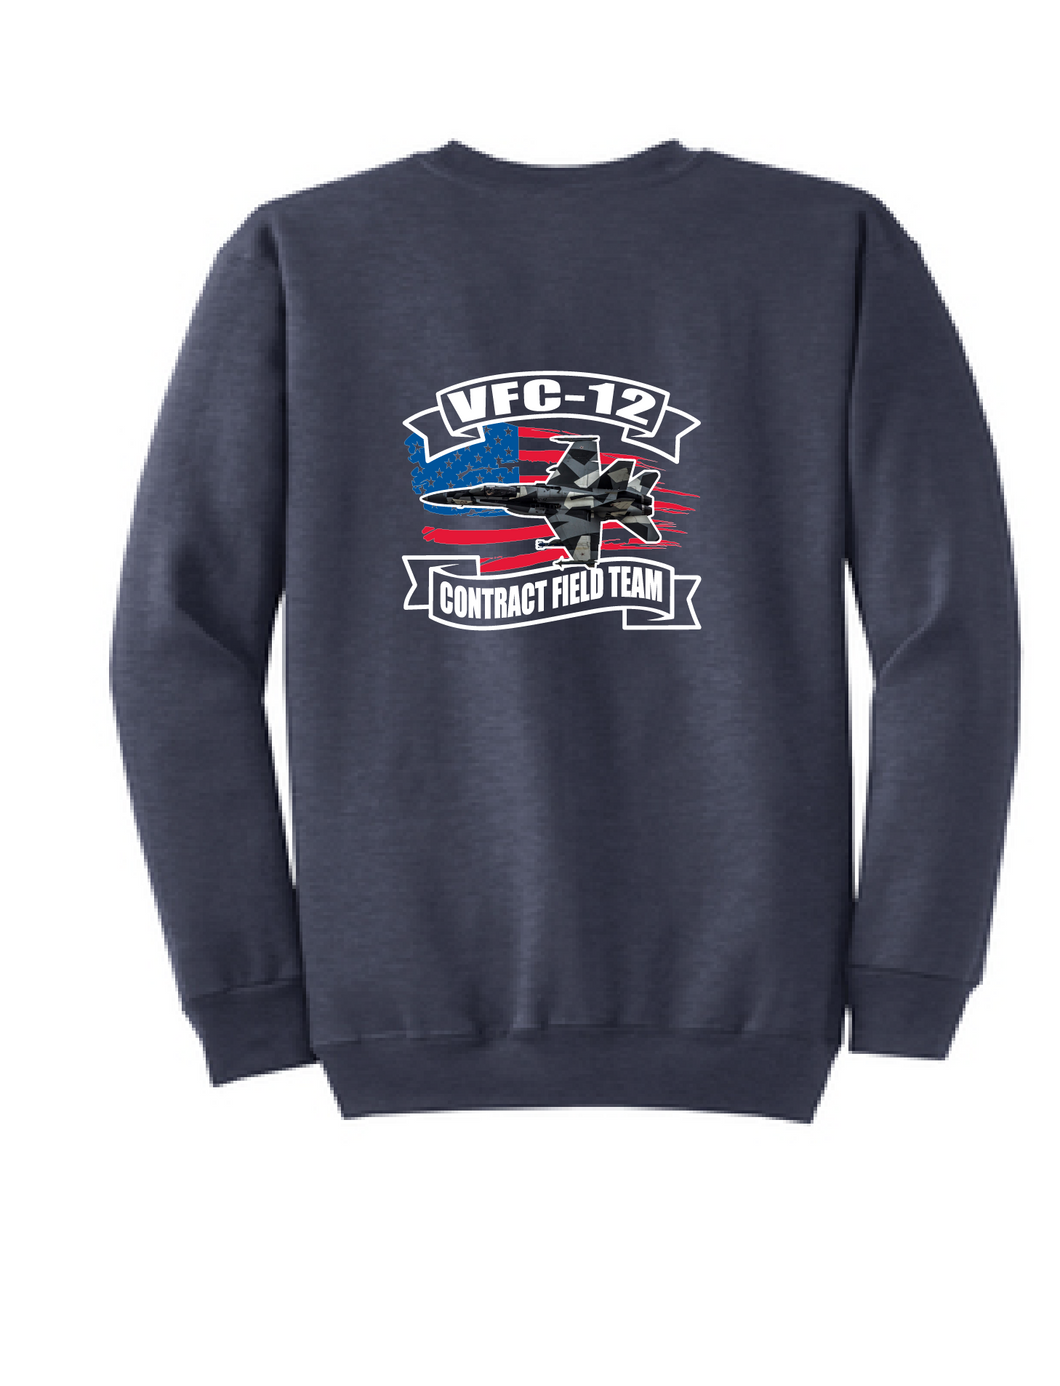 Fleece Crew Neck Sweatshirt / Heather Navy / VFC-12 - Fidgety